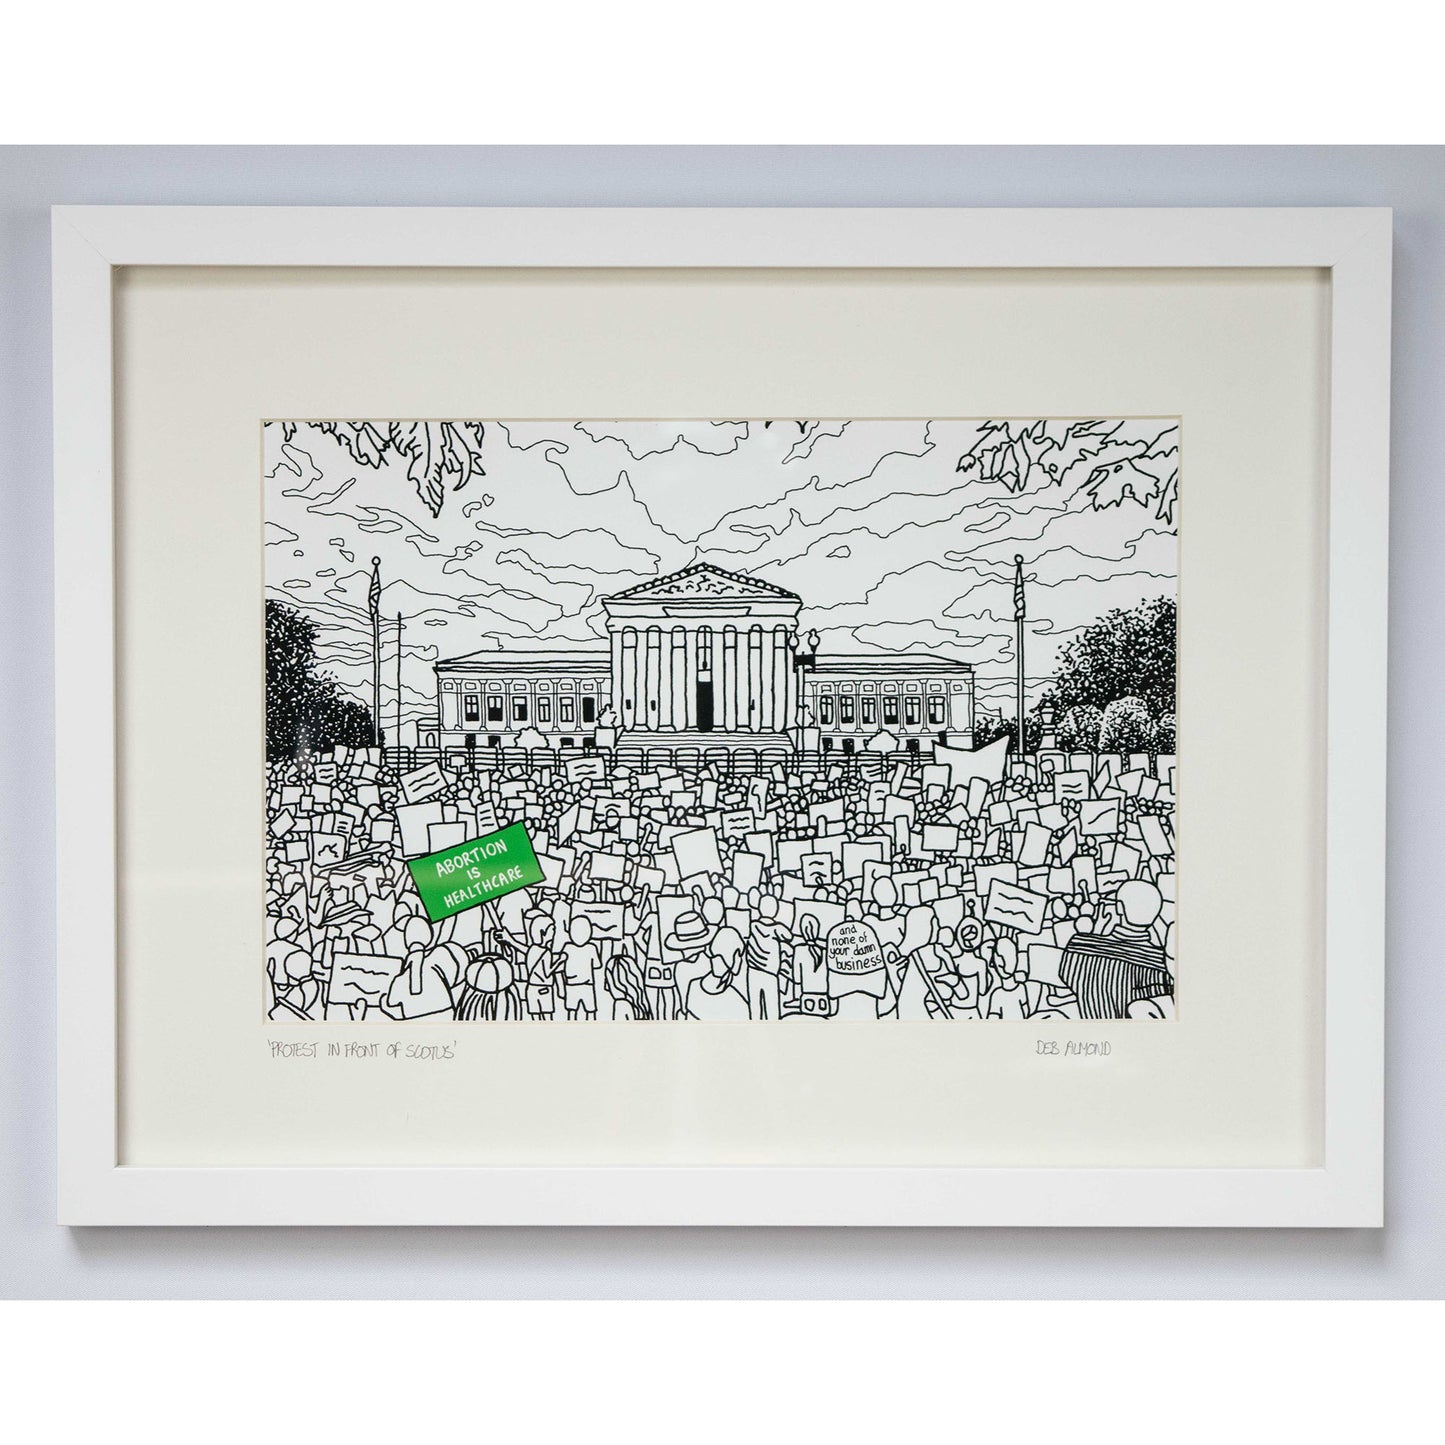 'Protest In Front of SCOTUS' Framed Giclée Art Print